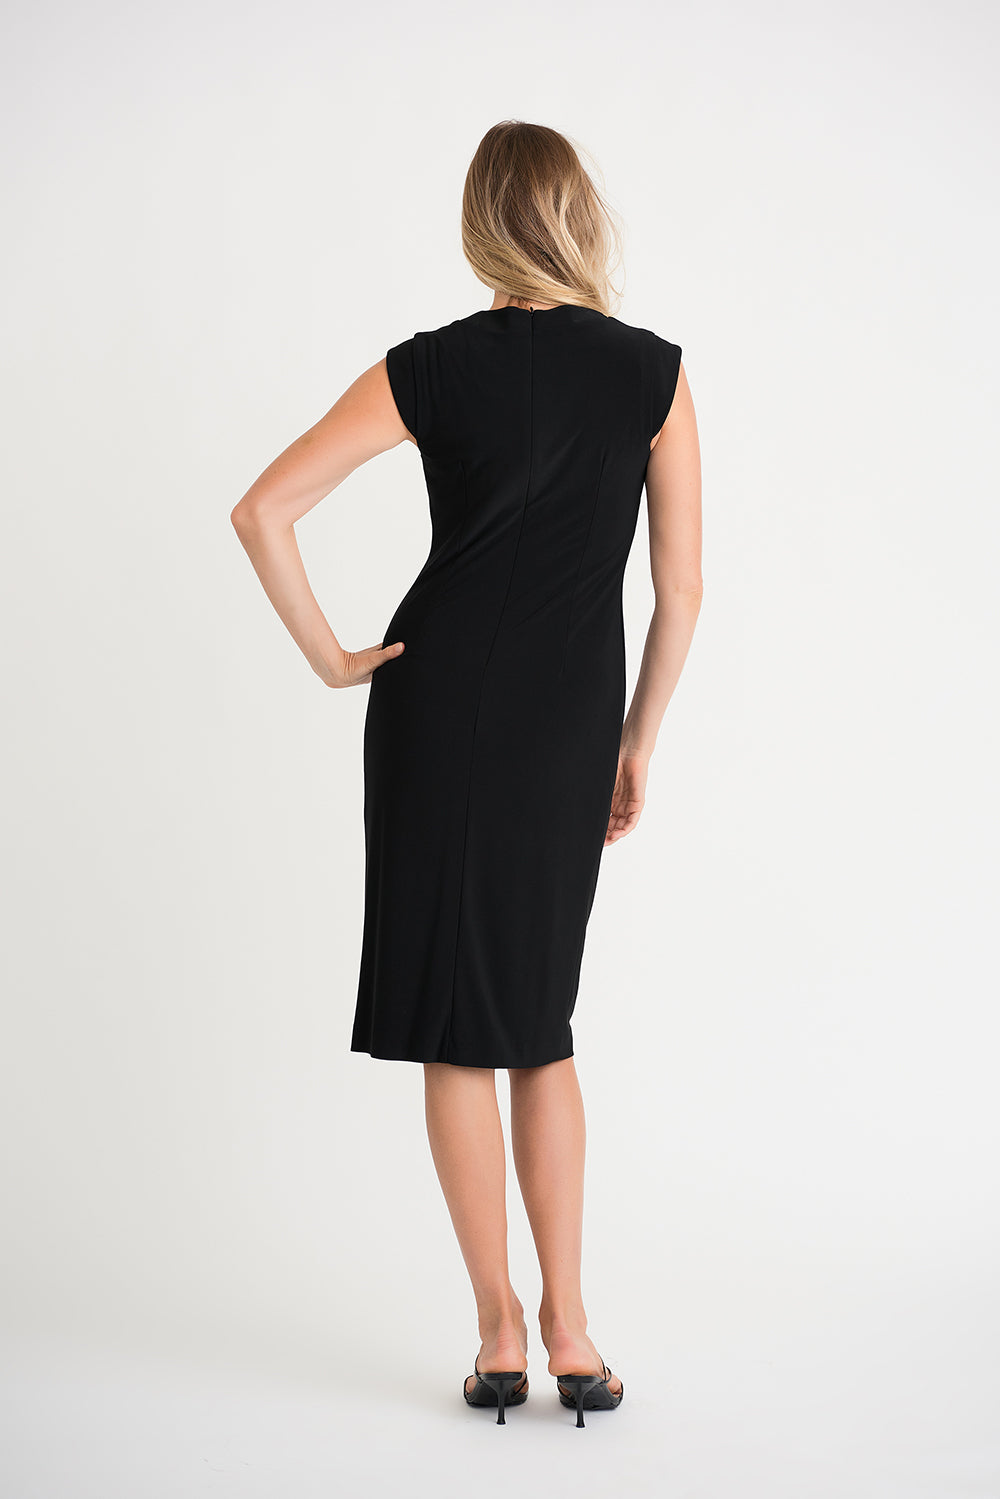 Joseph Ribkoff Black Dress Style 201404